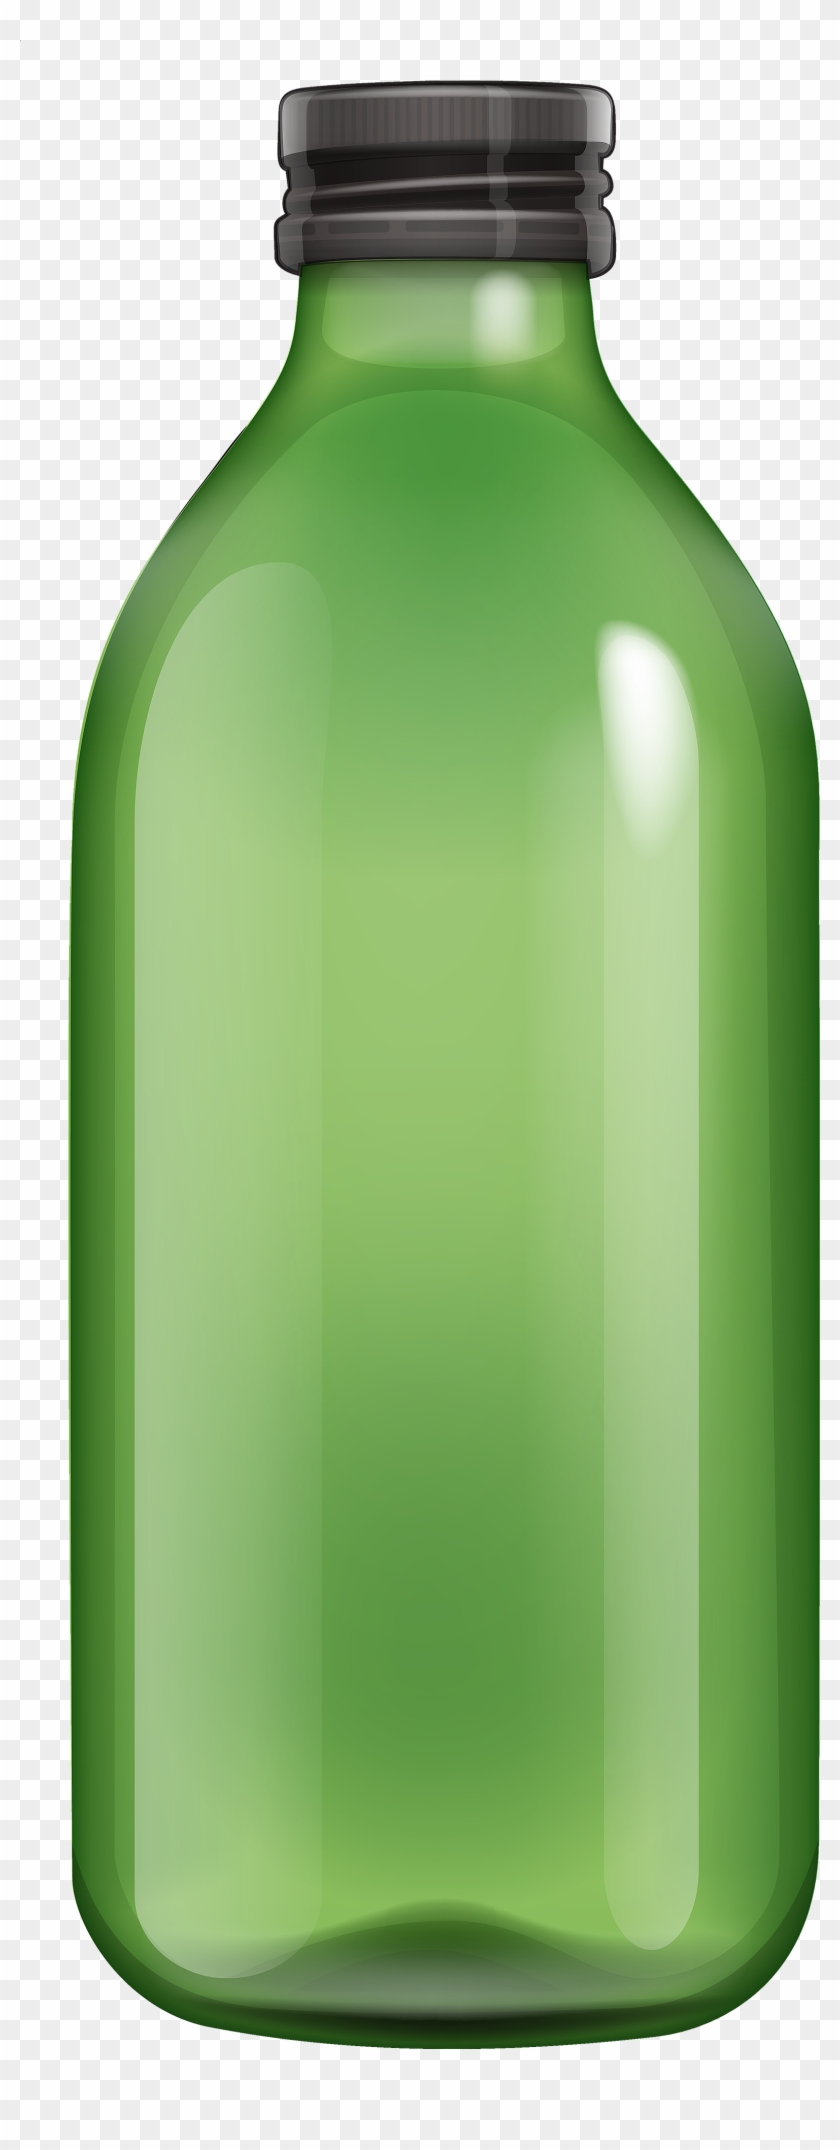 Green Bottle Png Clipart Best Web Glass Baby Bottles - Green Plastic Bottle Png #1105443